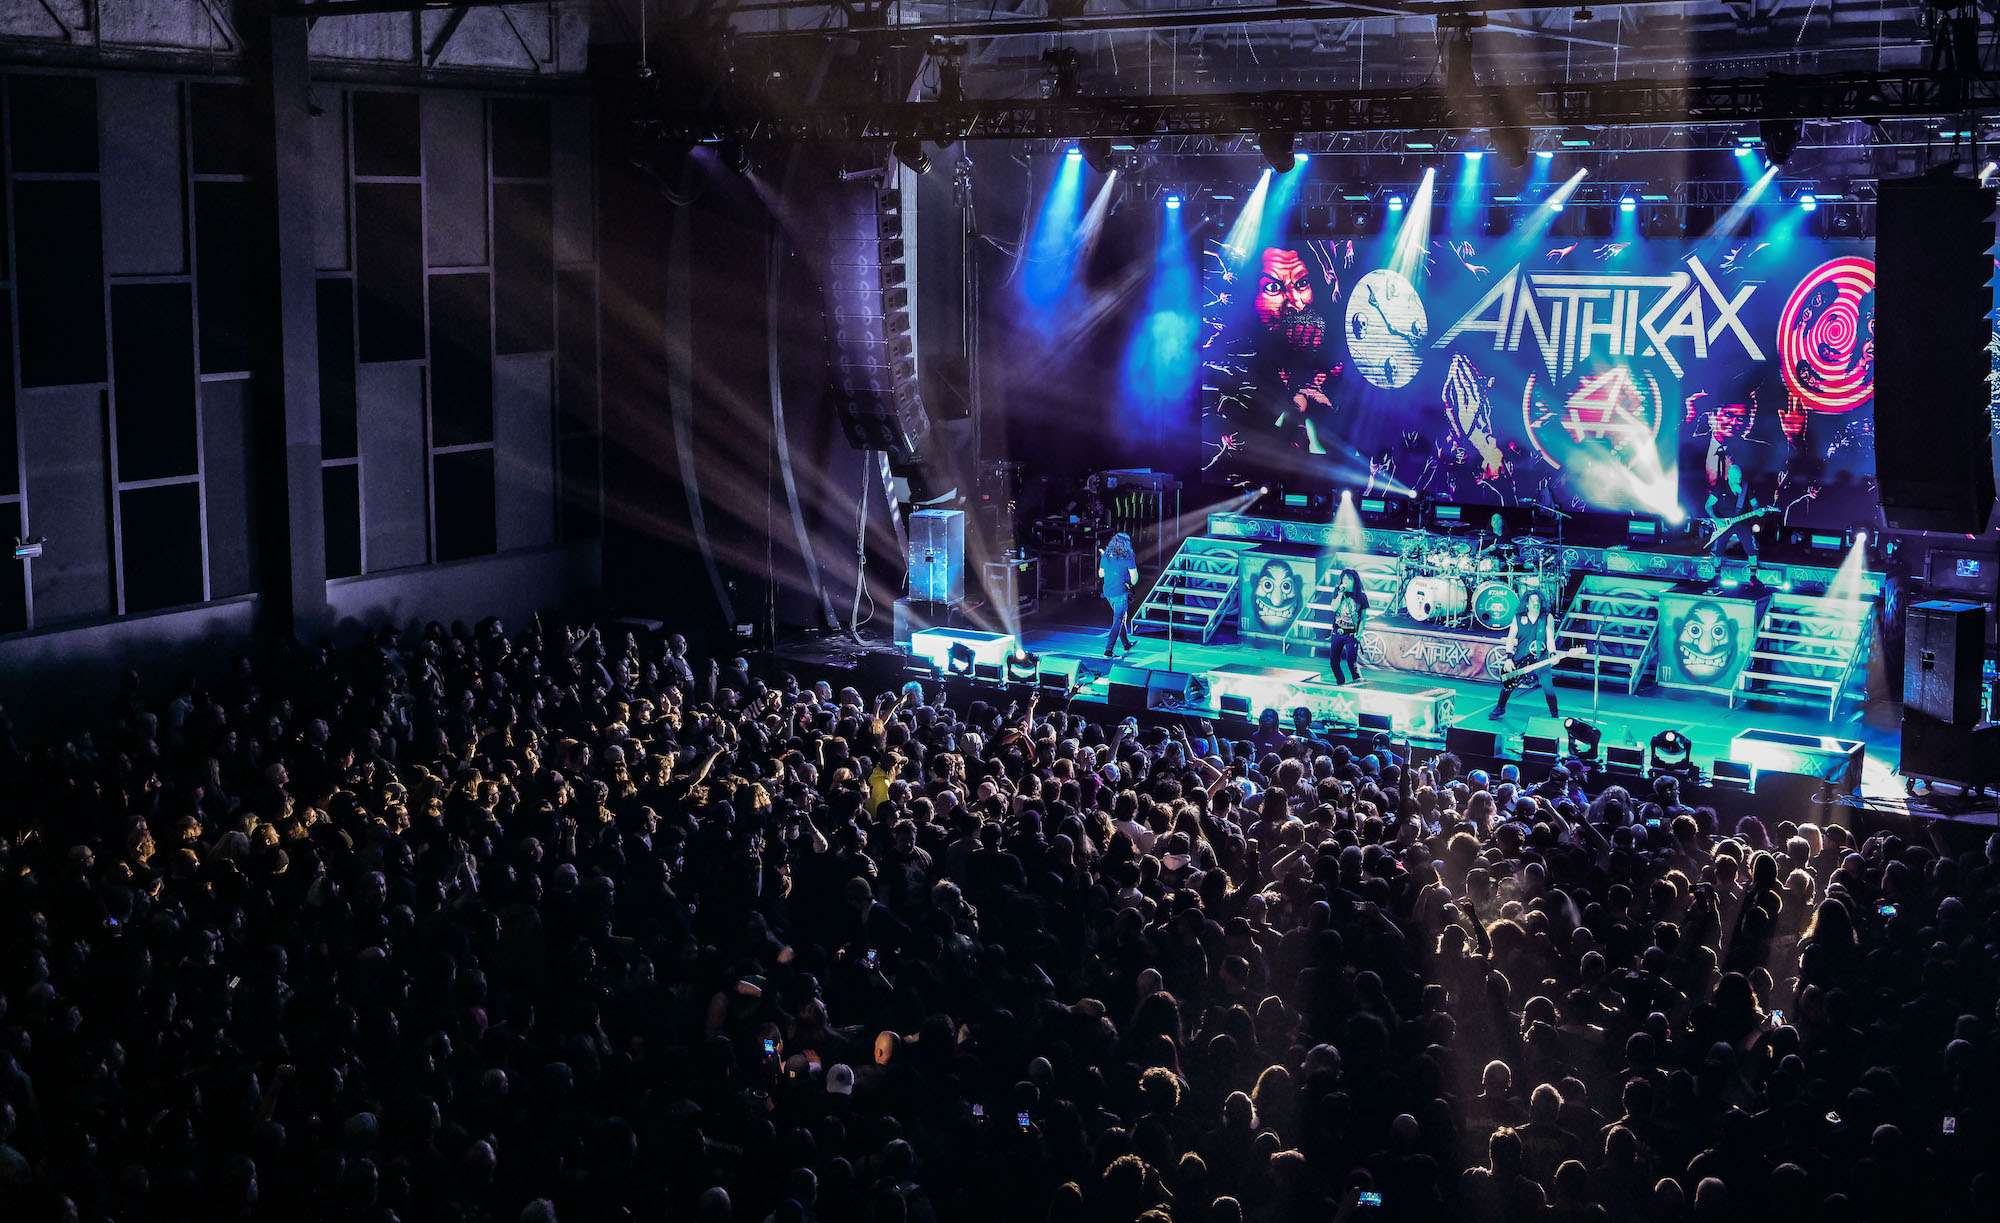 Anthrax Live at Radius [GALLERY] 23